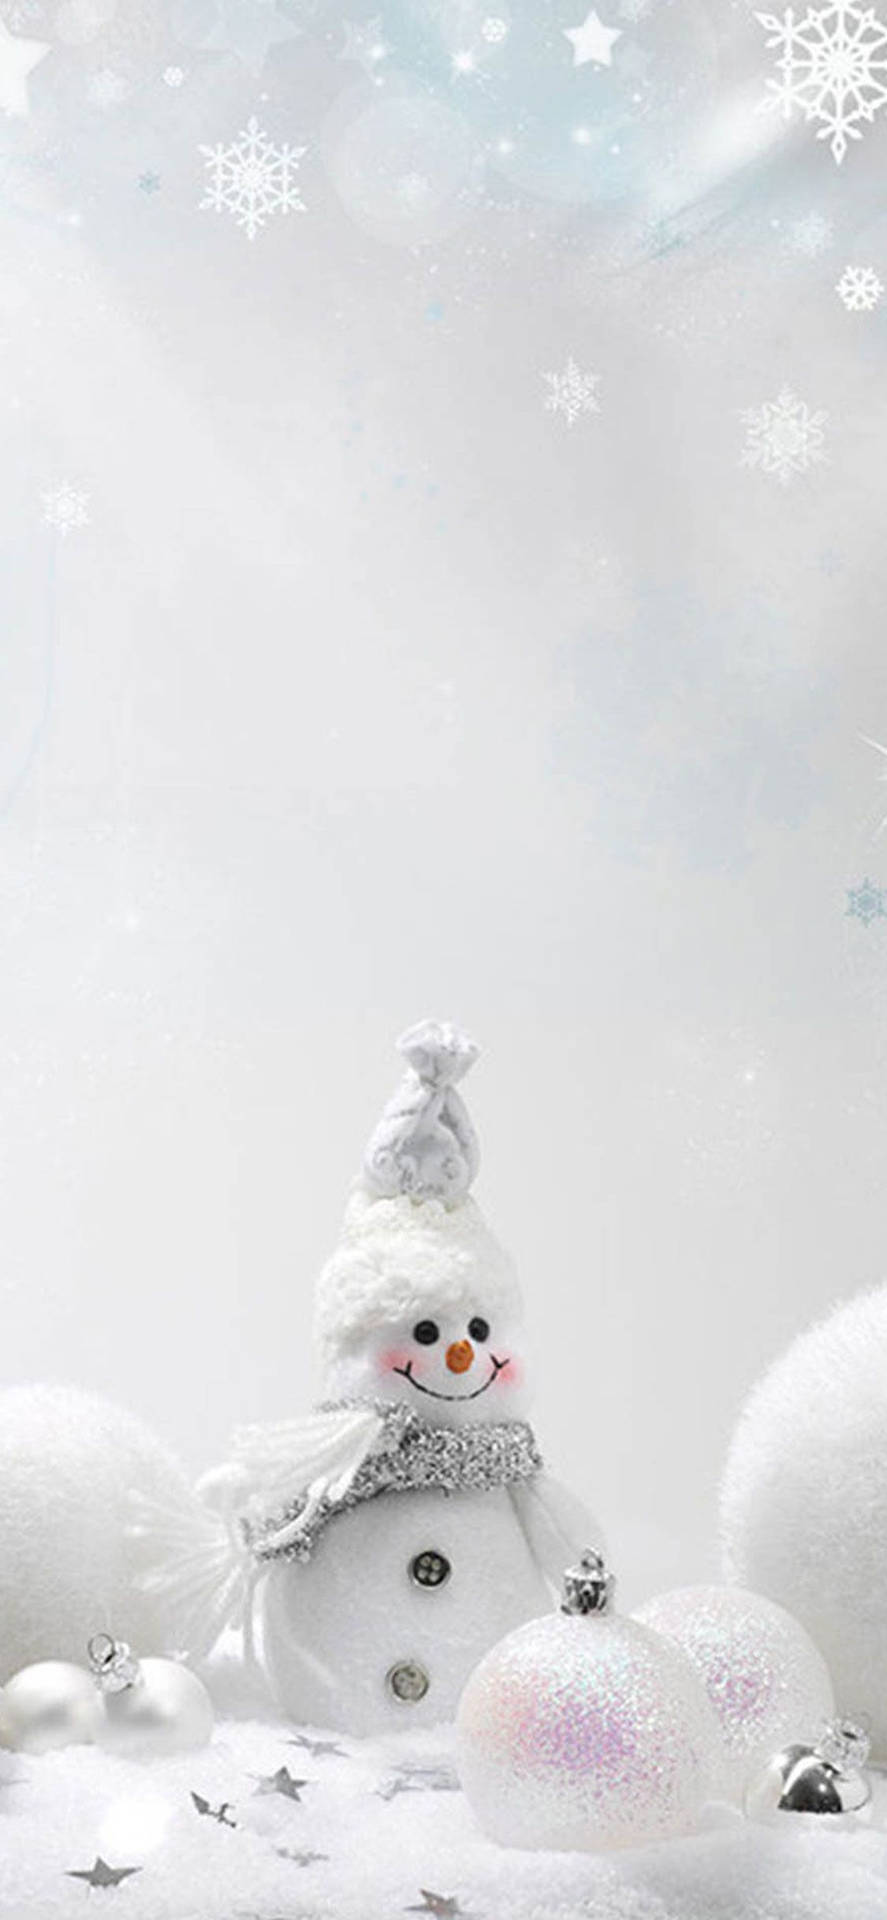 Winter Phone Smiling Snowman